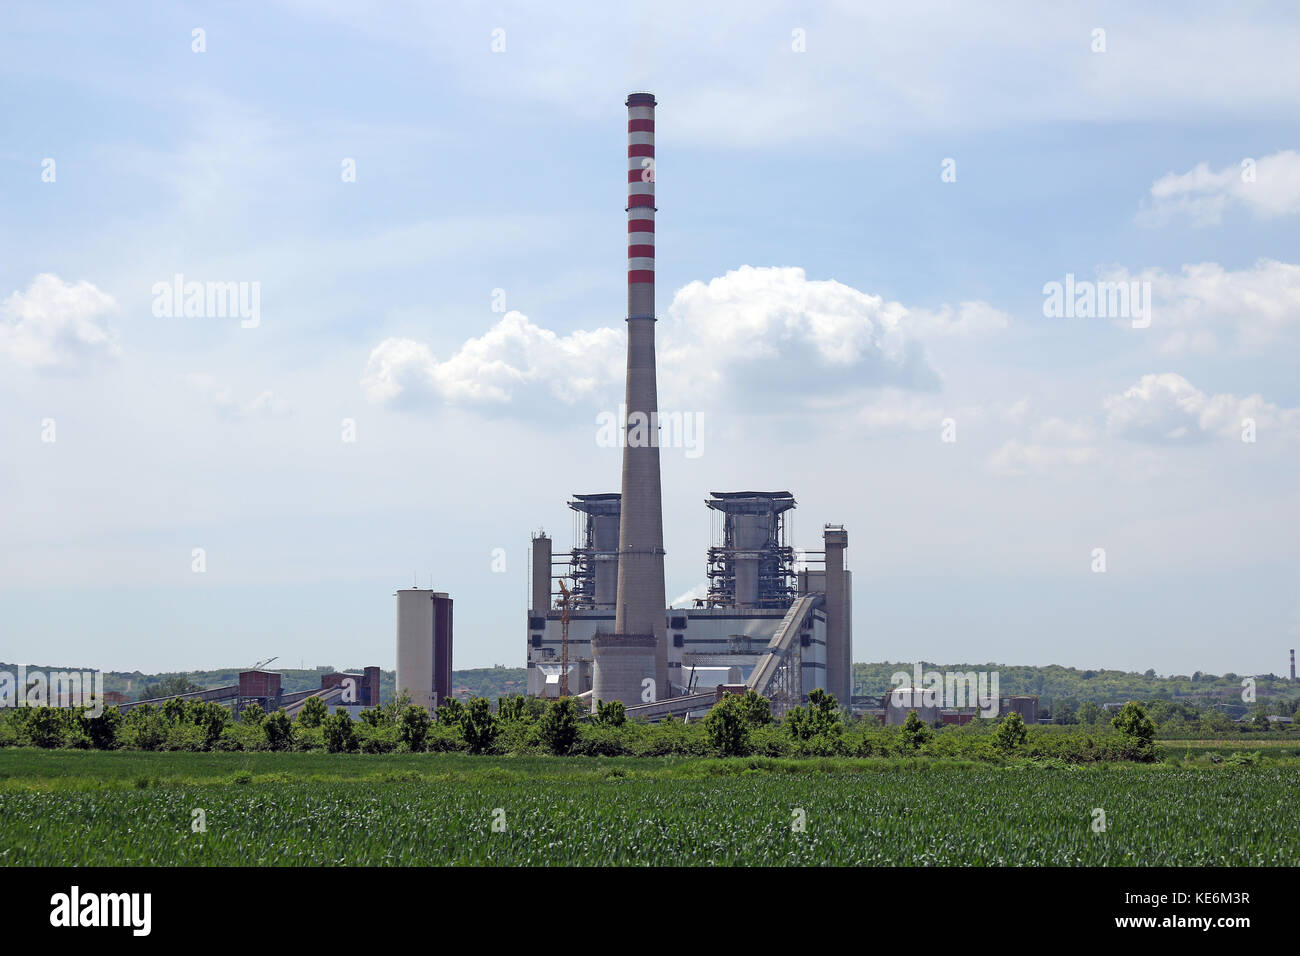 Planta de energía térmica y la industria energética Foto de stock